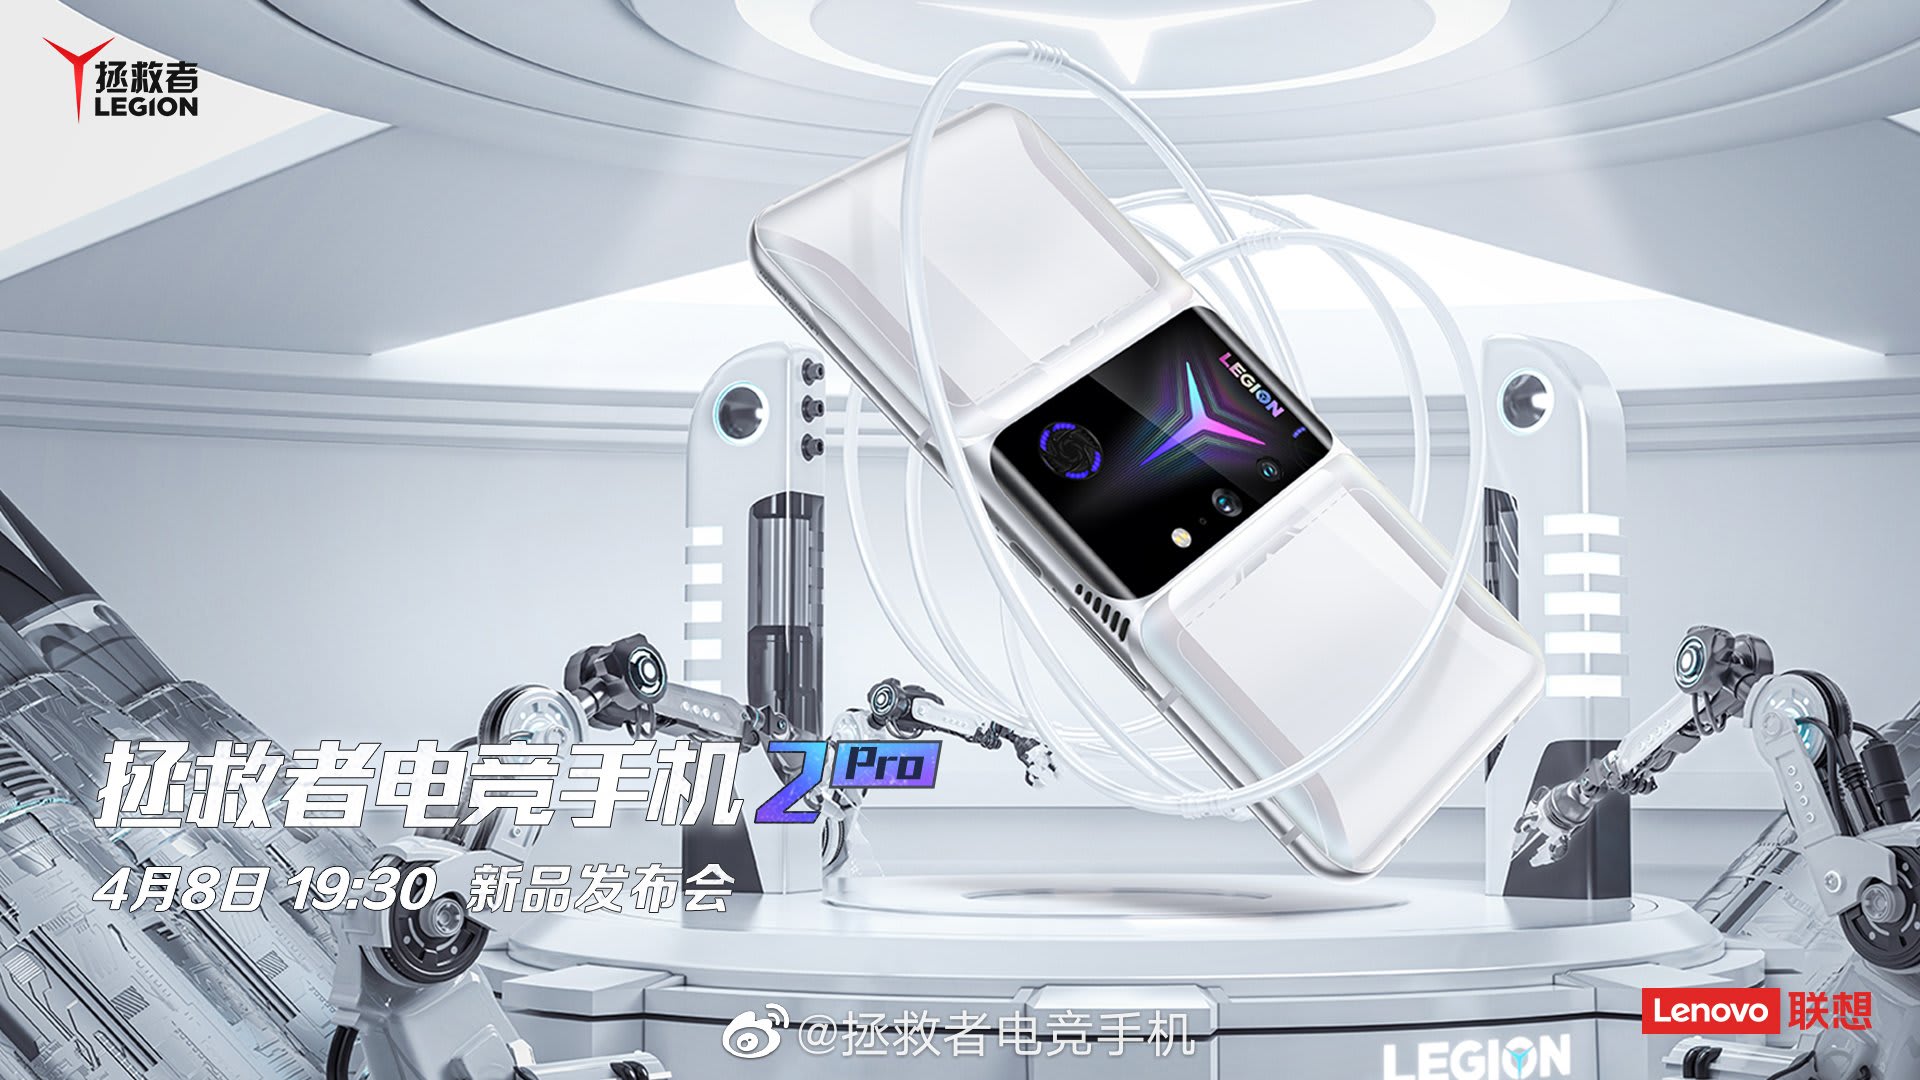 Lenovo’s Legion Phone 2 Pro